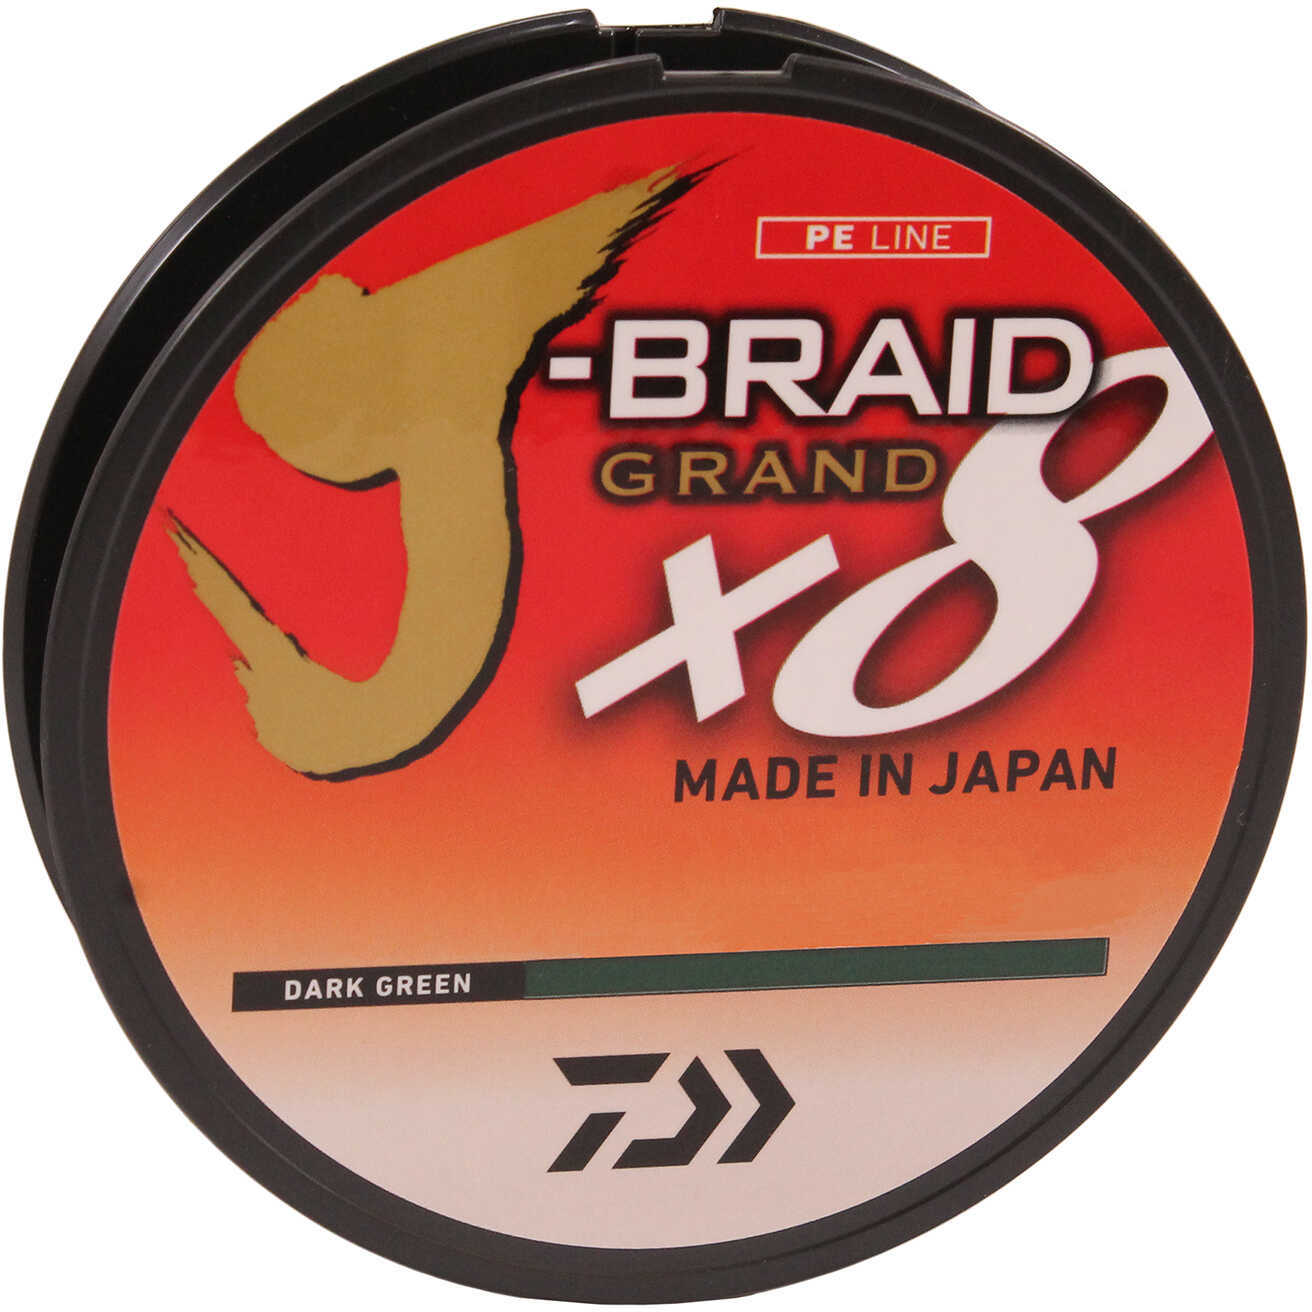 Daiwa J-Braid x8 Grand Braided Line 300 Yards 40-img-1